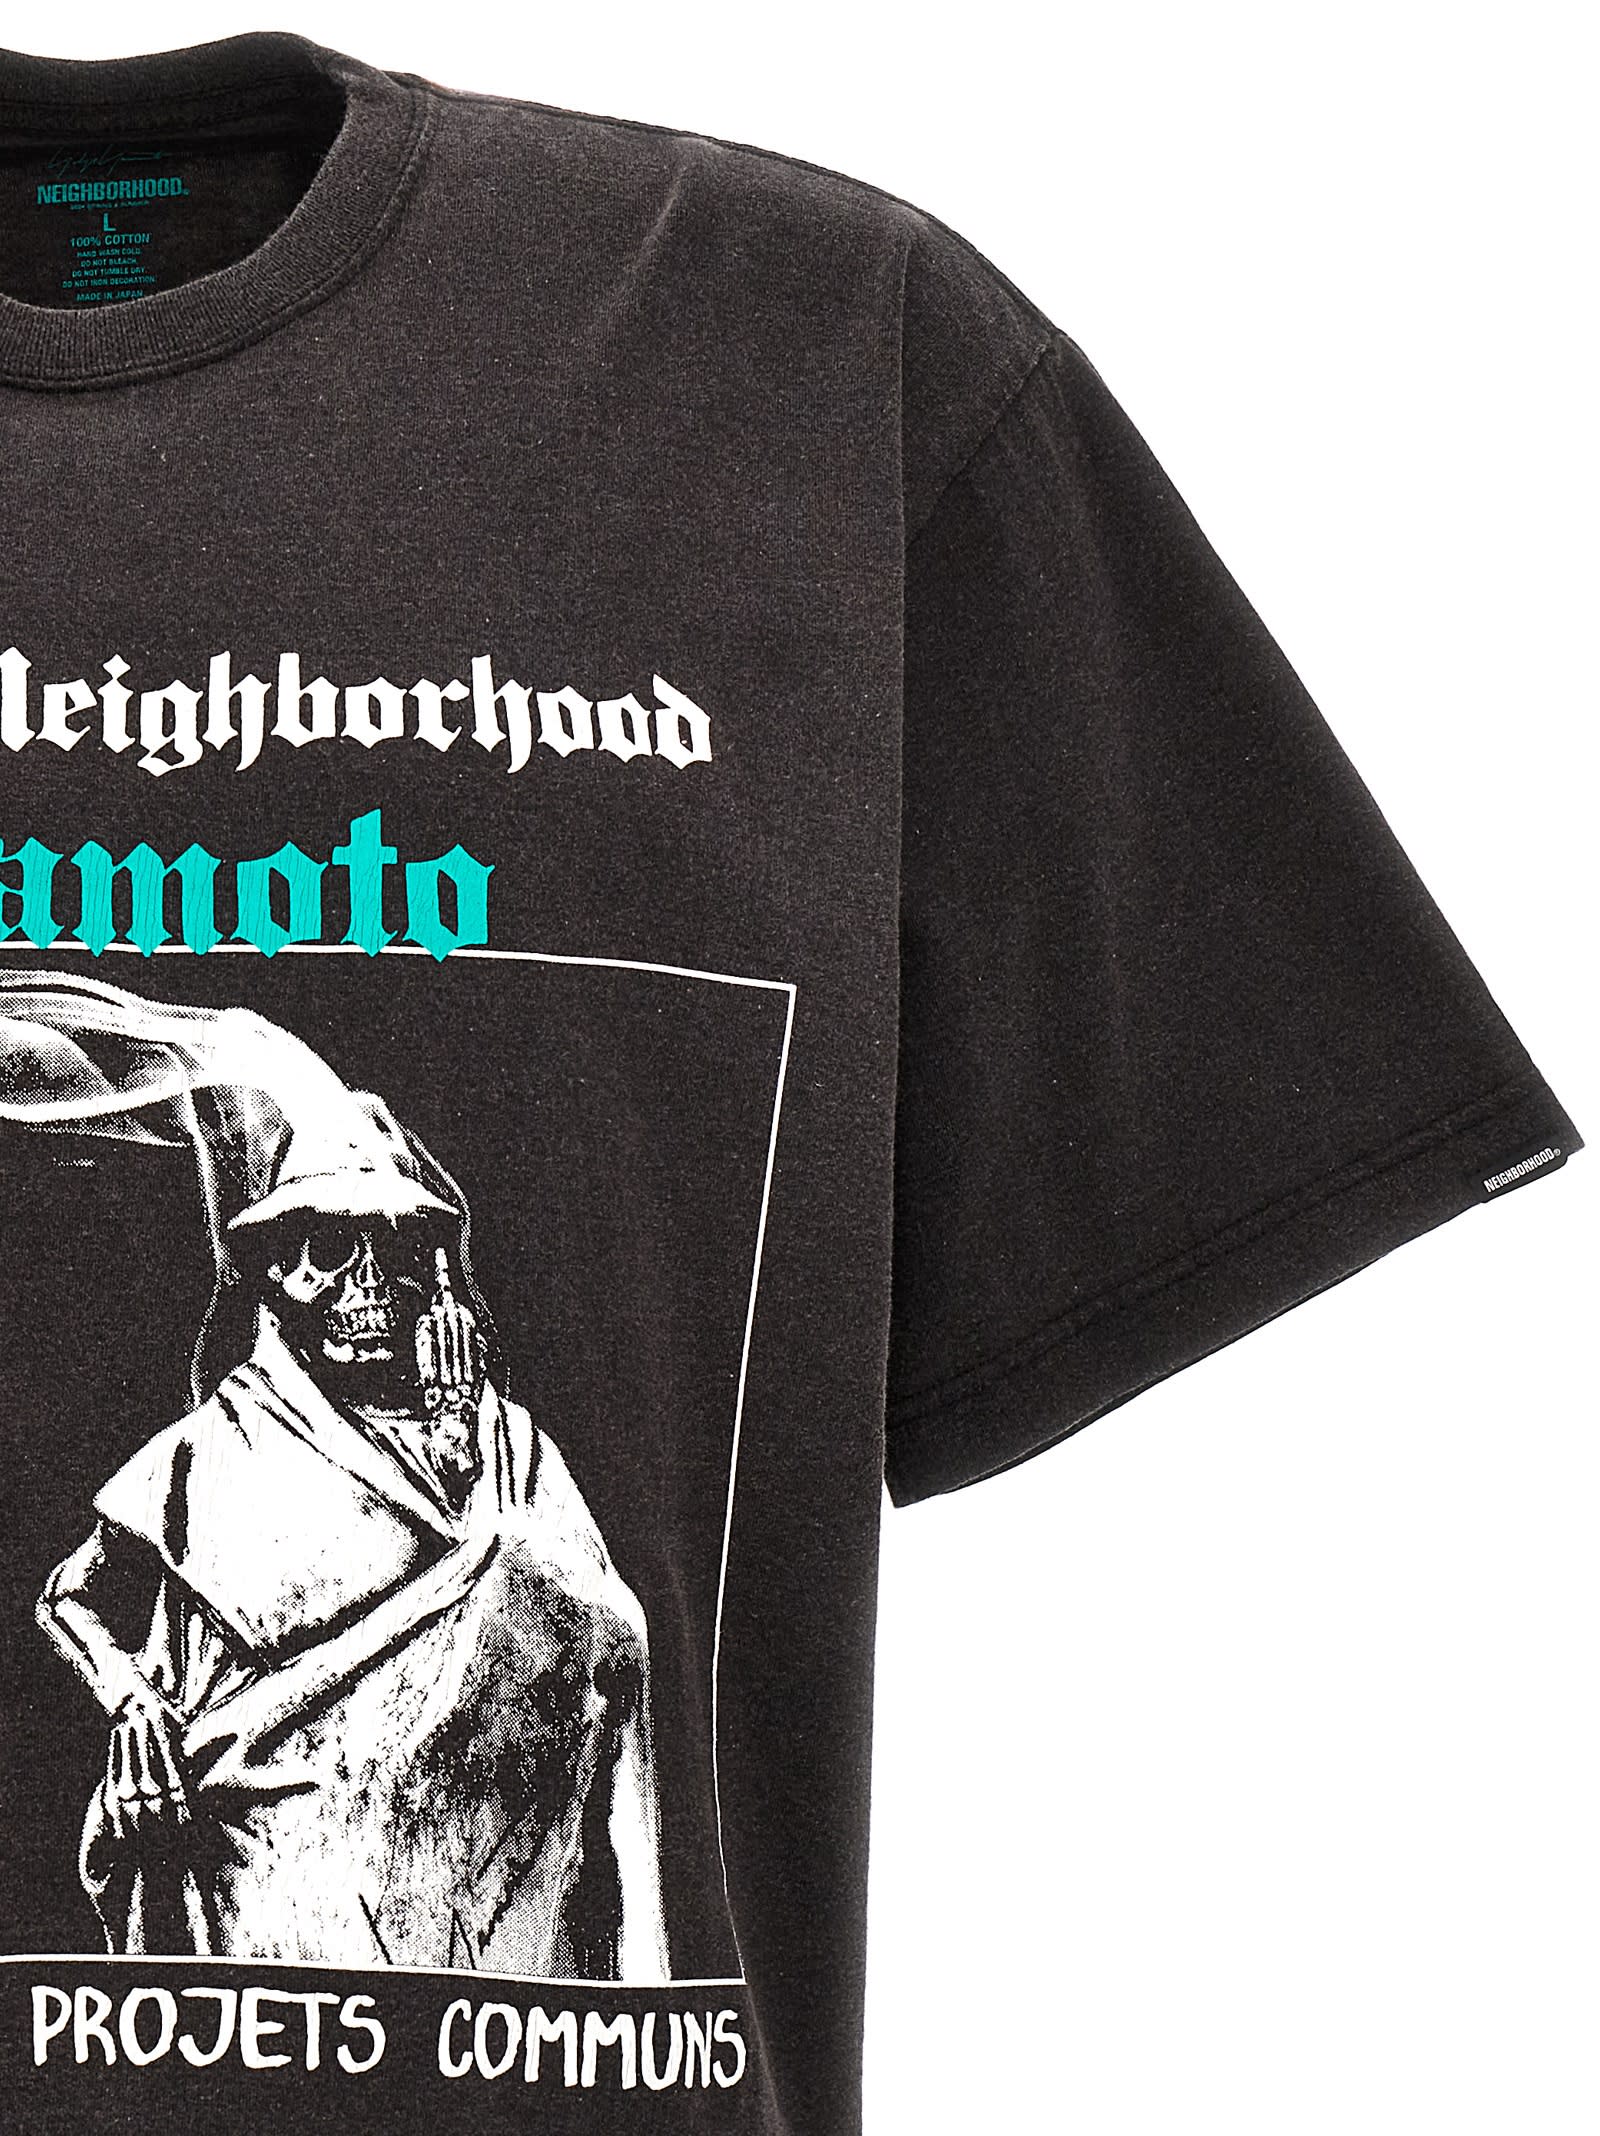 Shop Yohji Yamamoto Neighborhood T-shirt In Gray